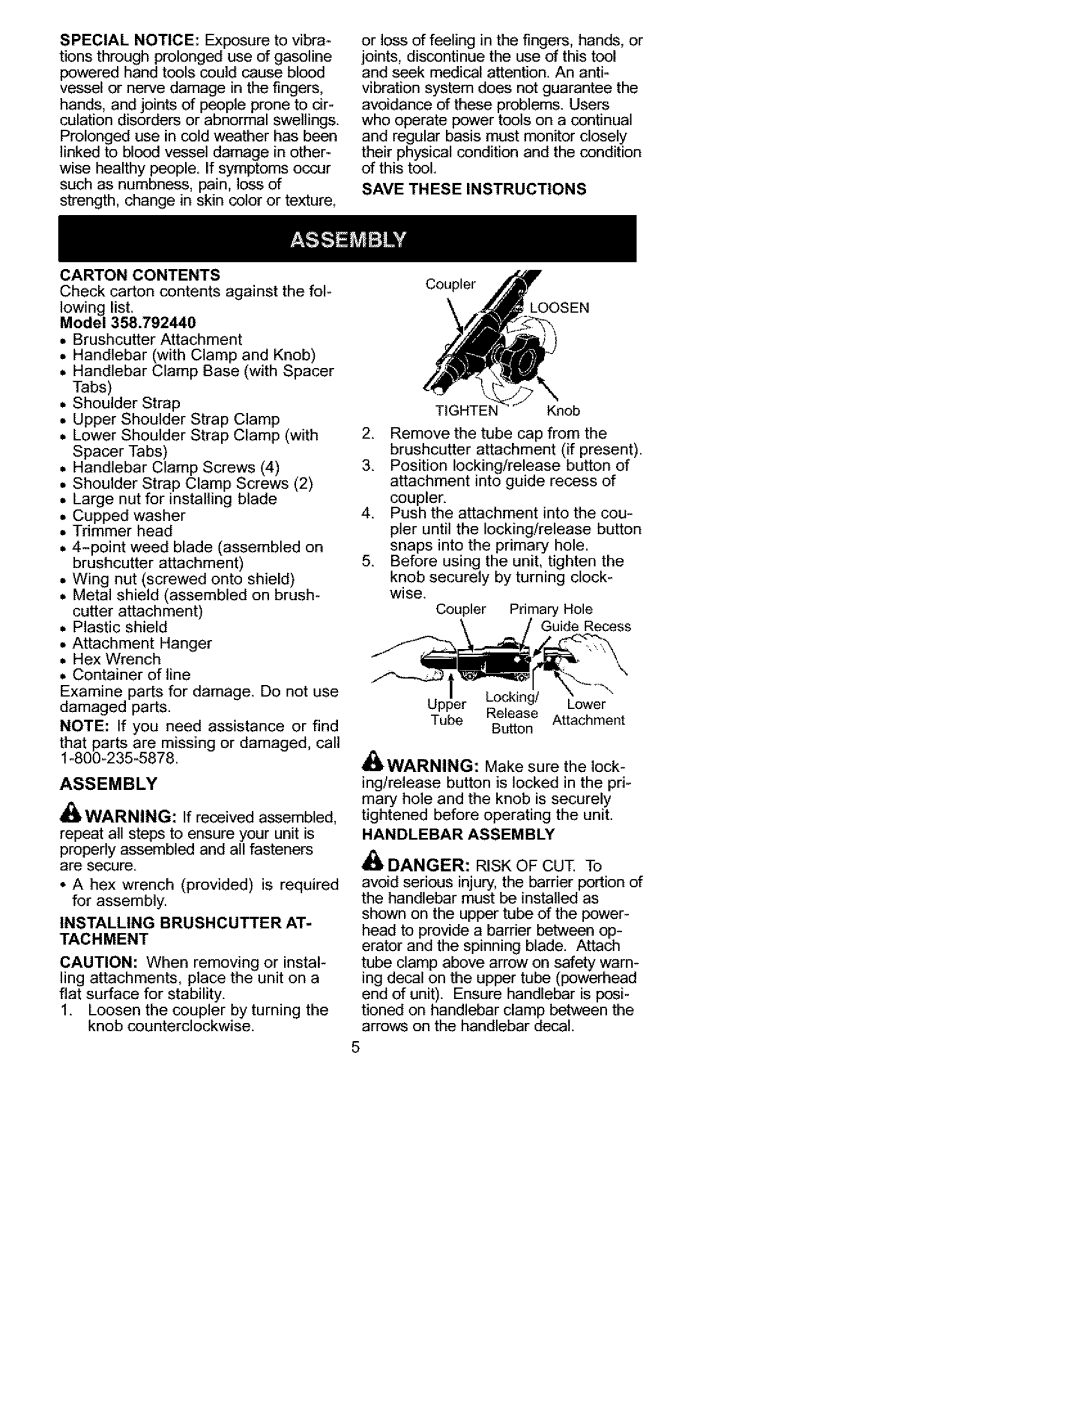 Craftsman 358.792440 instruction manual Guide Recess, Handlebar Assembly 